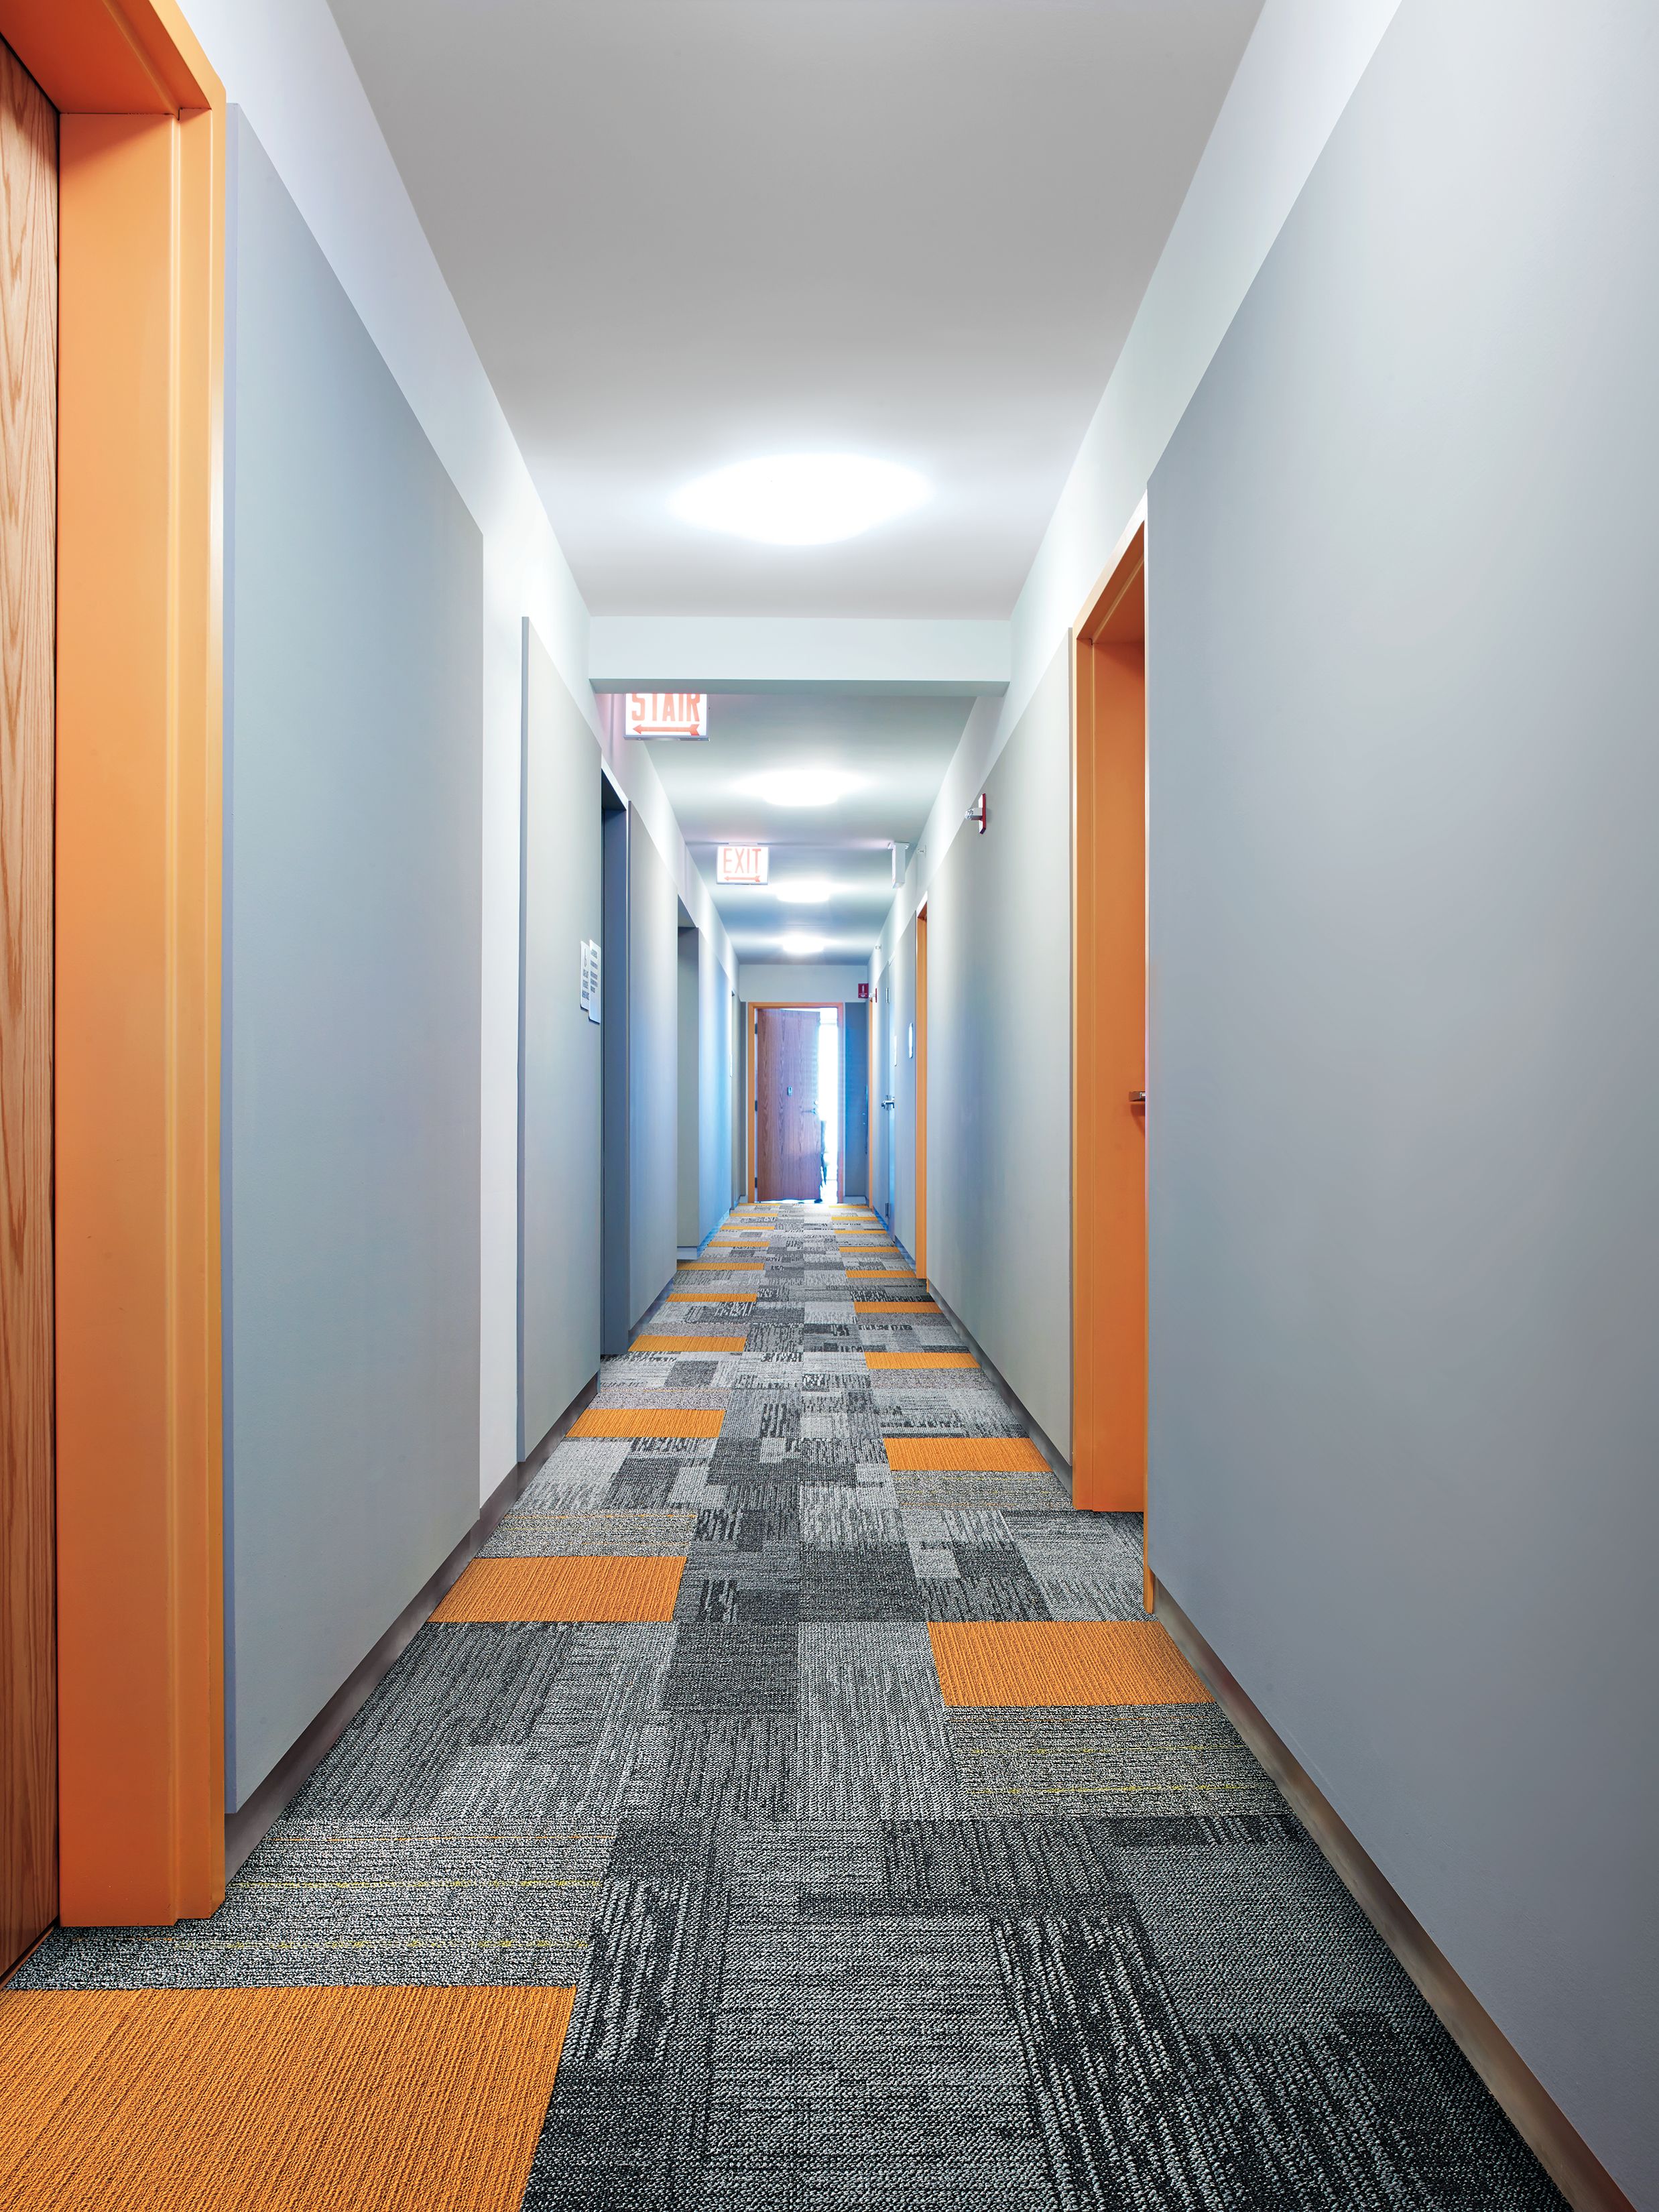 Interface Sidetrack carpet tile in a hallway imagen número 8